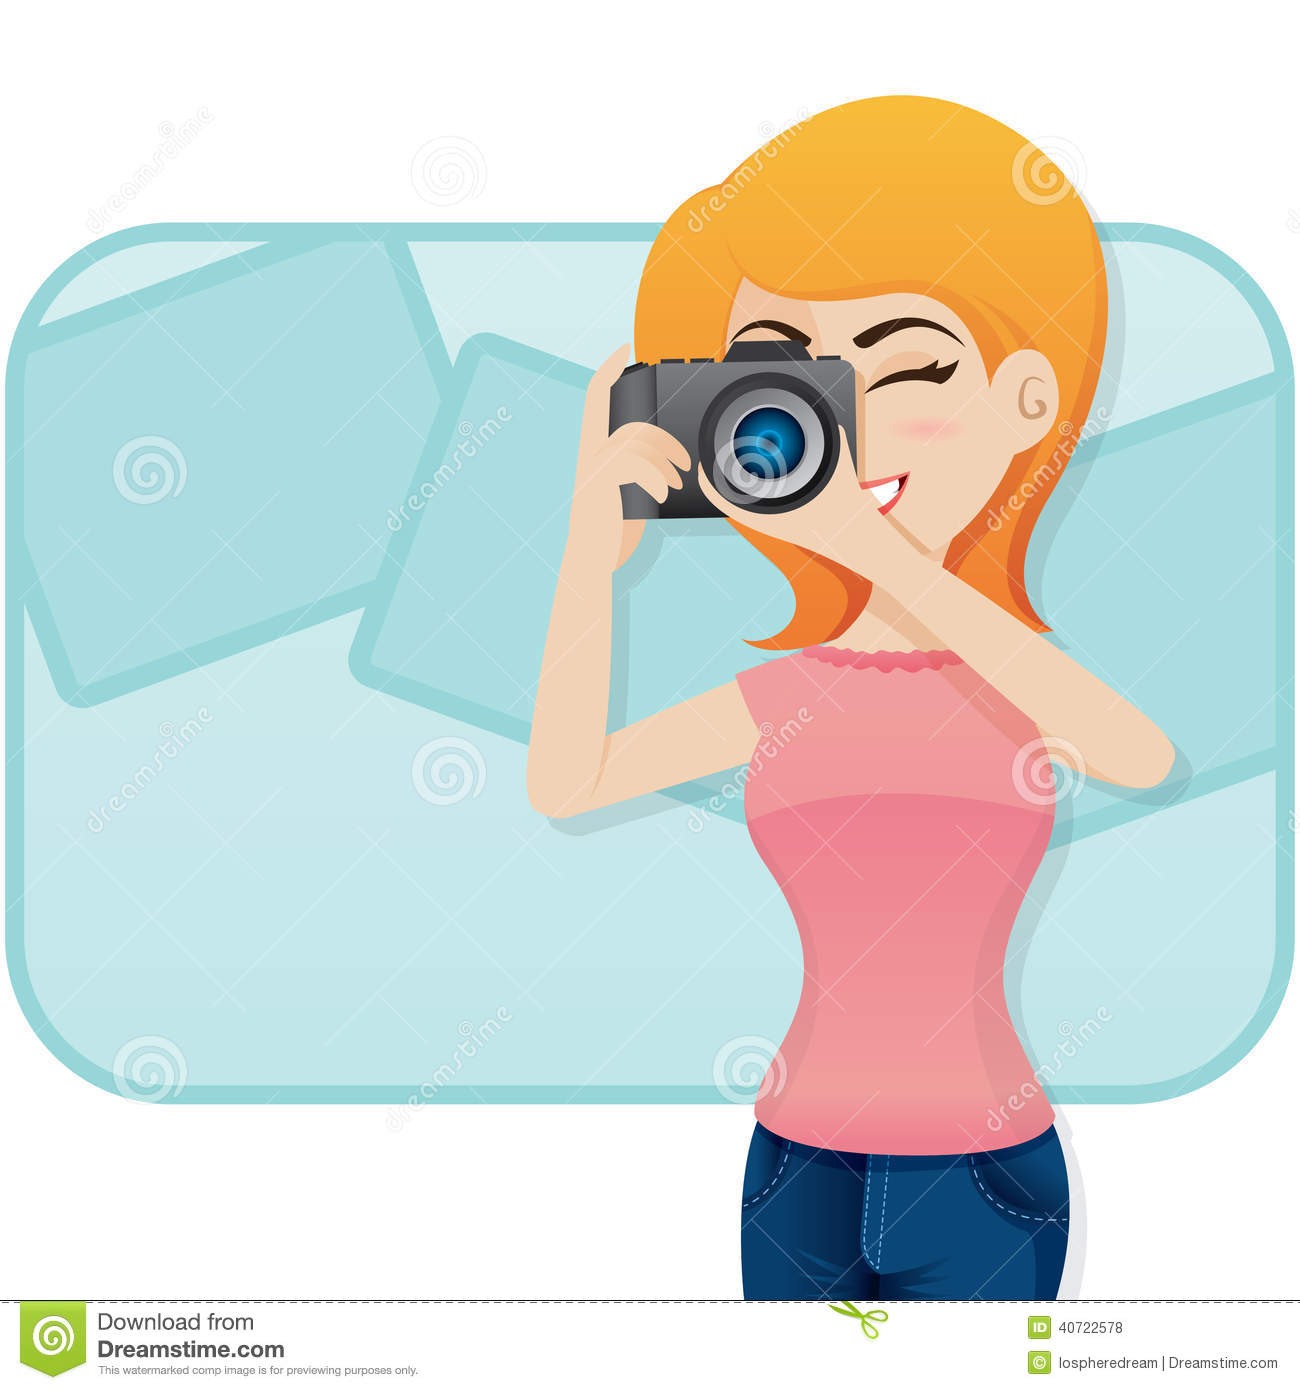 Cute Cartoon Girl with Camera